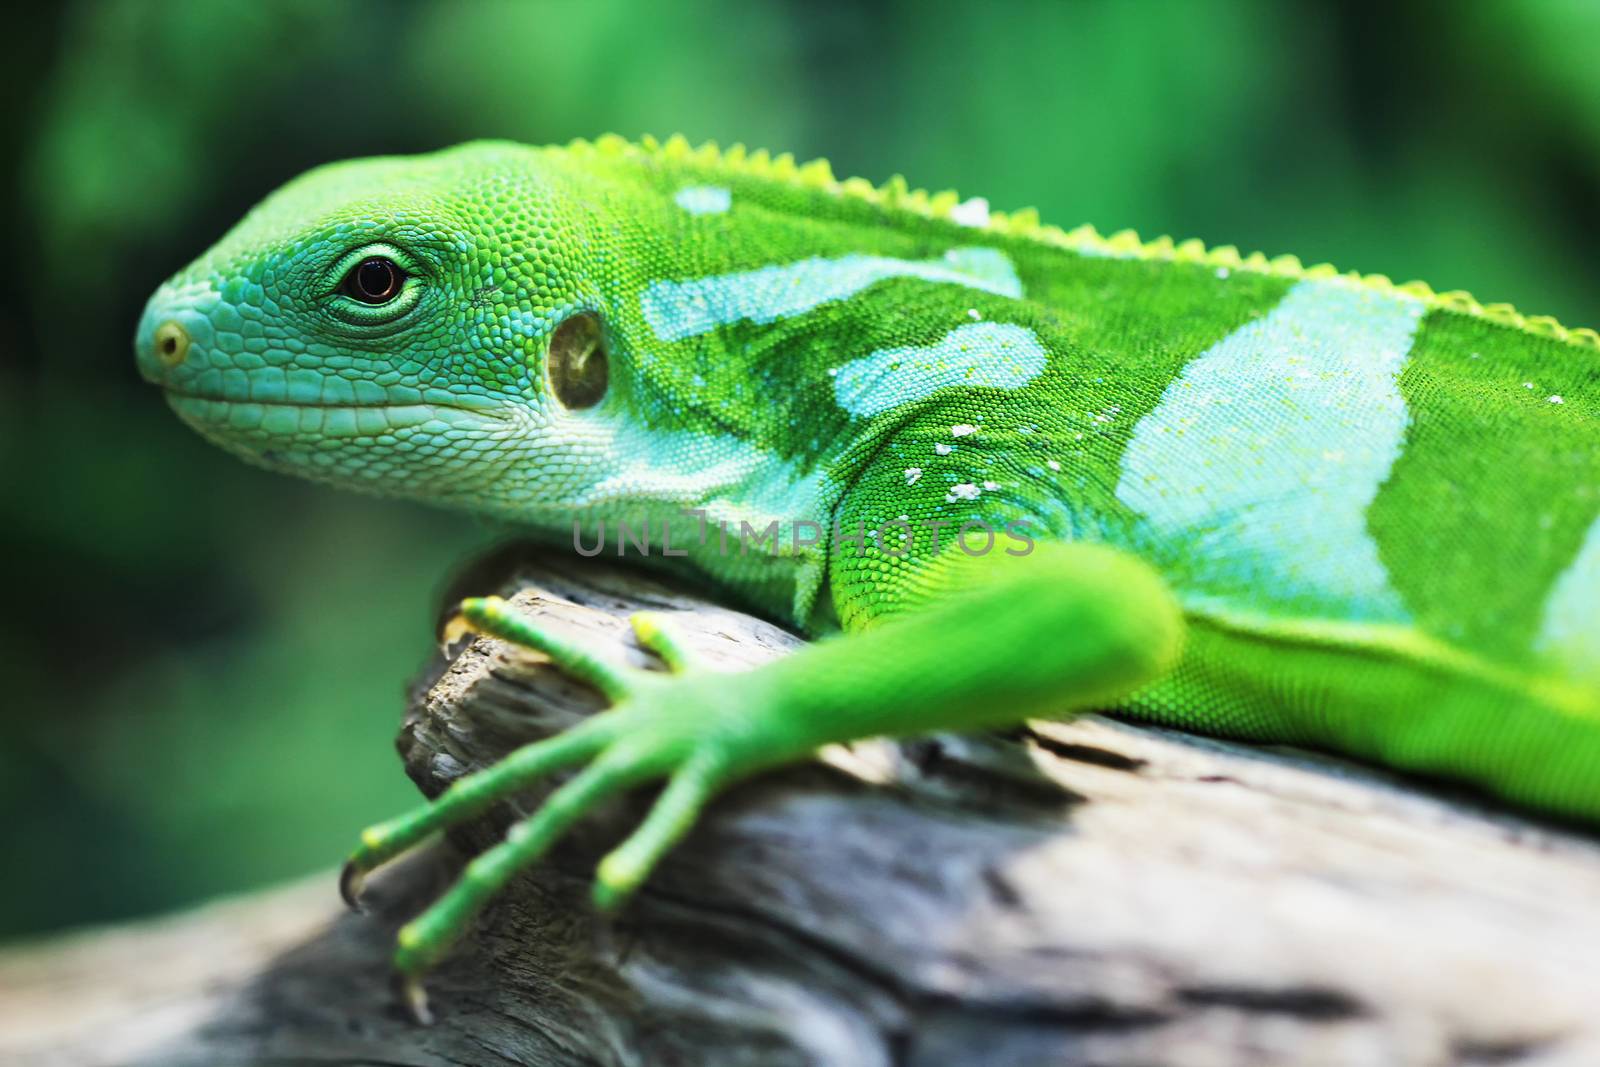 Lizard close up animal portrait by Voinakh